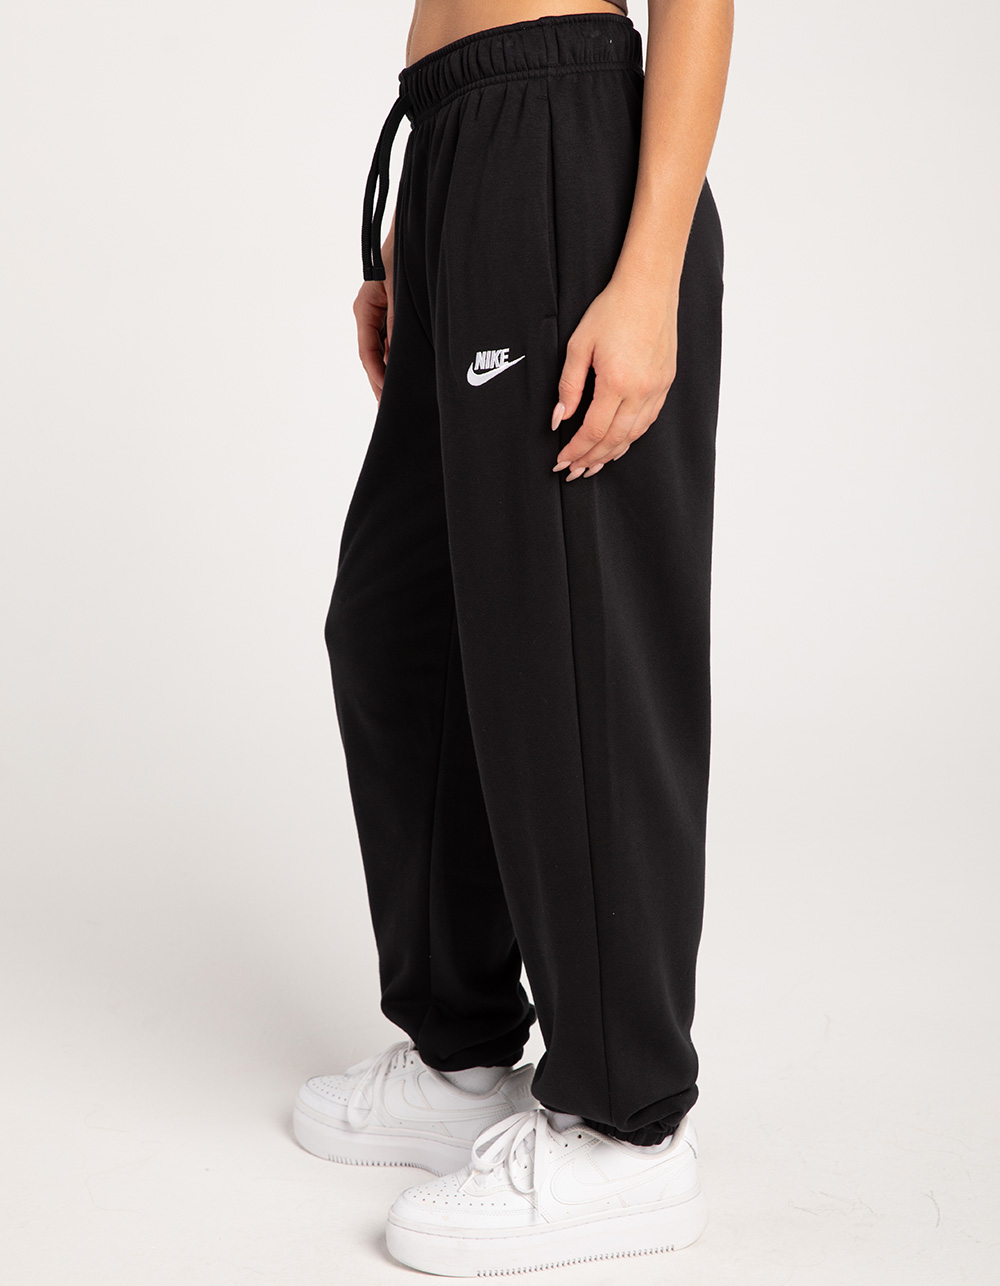 Black Nike sweatpants size L rip on the but